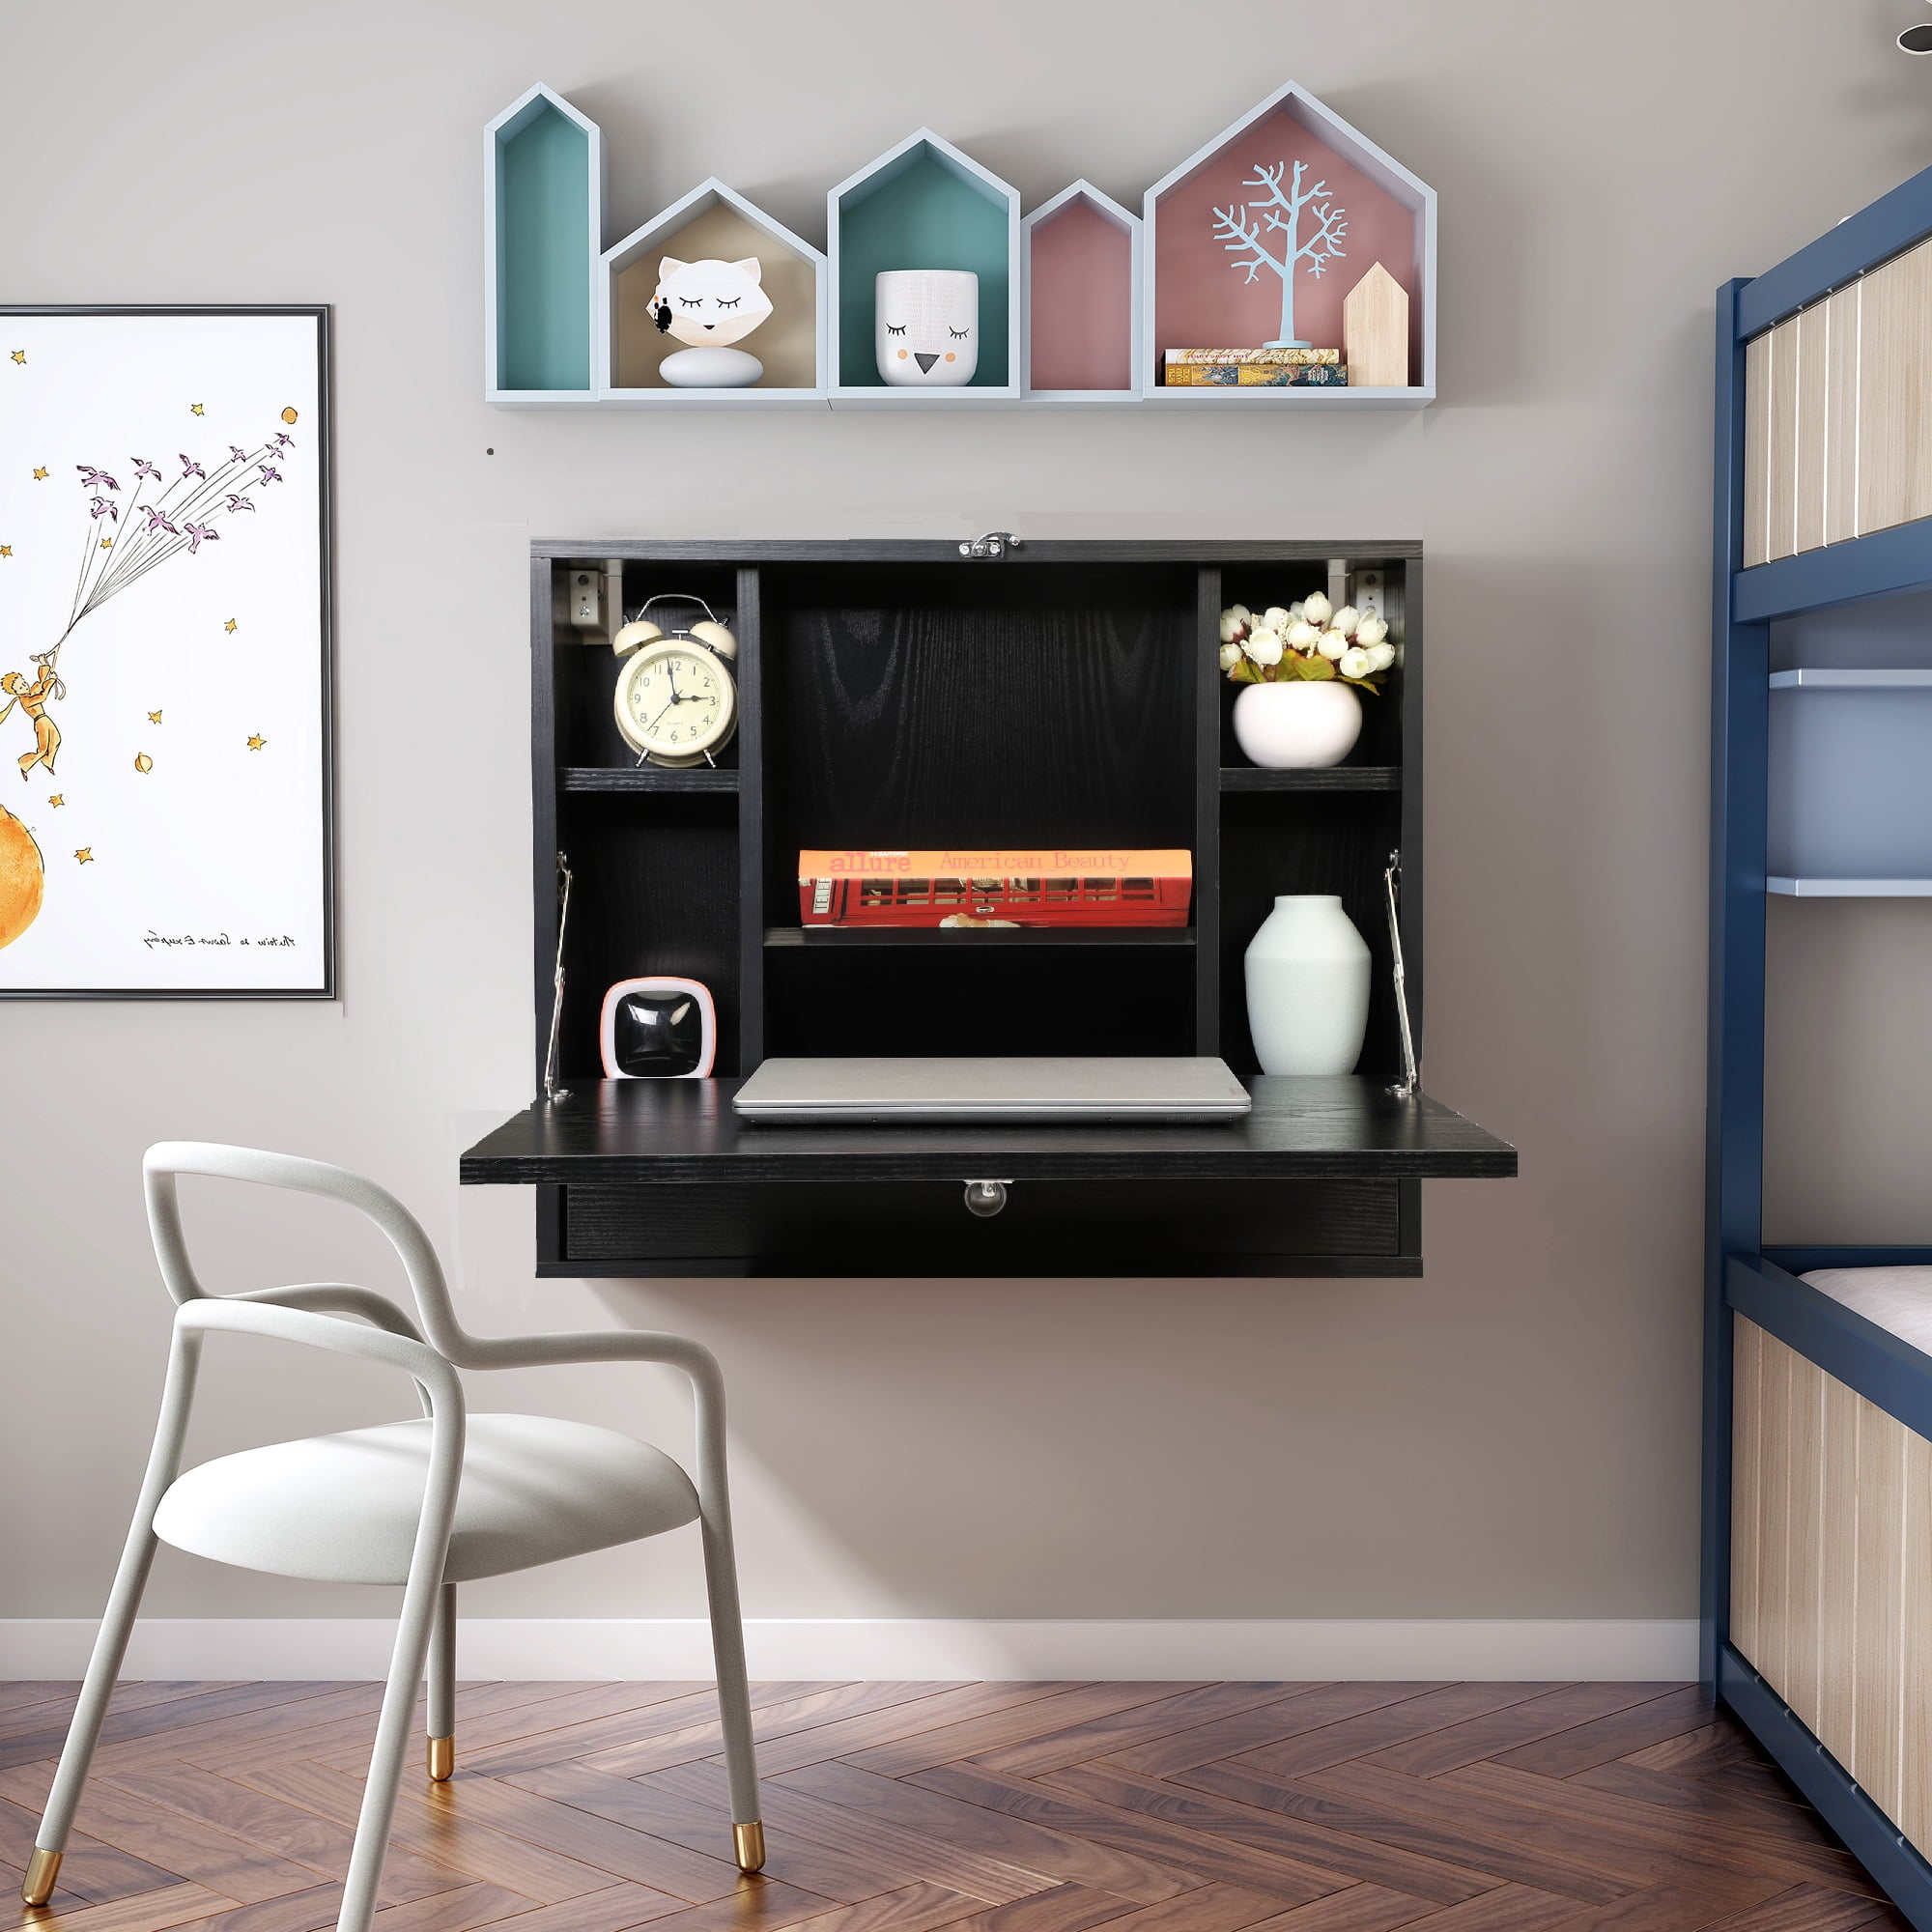 Details about   Kids Room Wooden Book Shelves Decorative Phone/Laptop Desktop Storage Organizer 